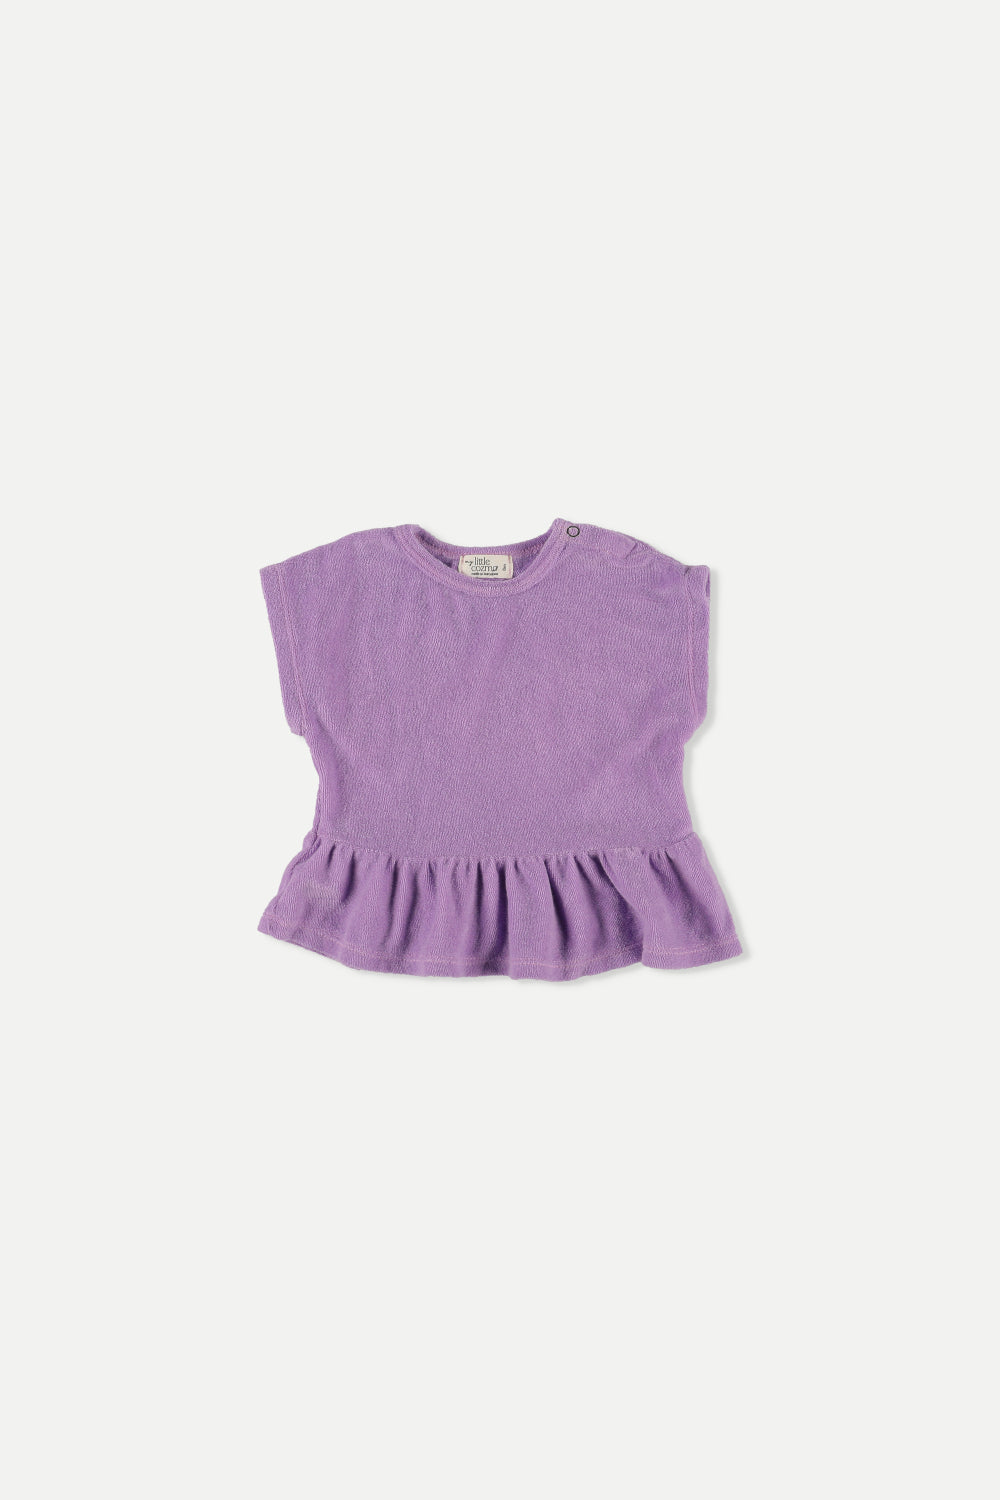 Top Baby Girl Corinne Purple - ملابس